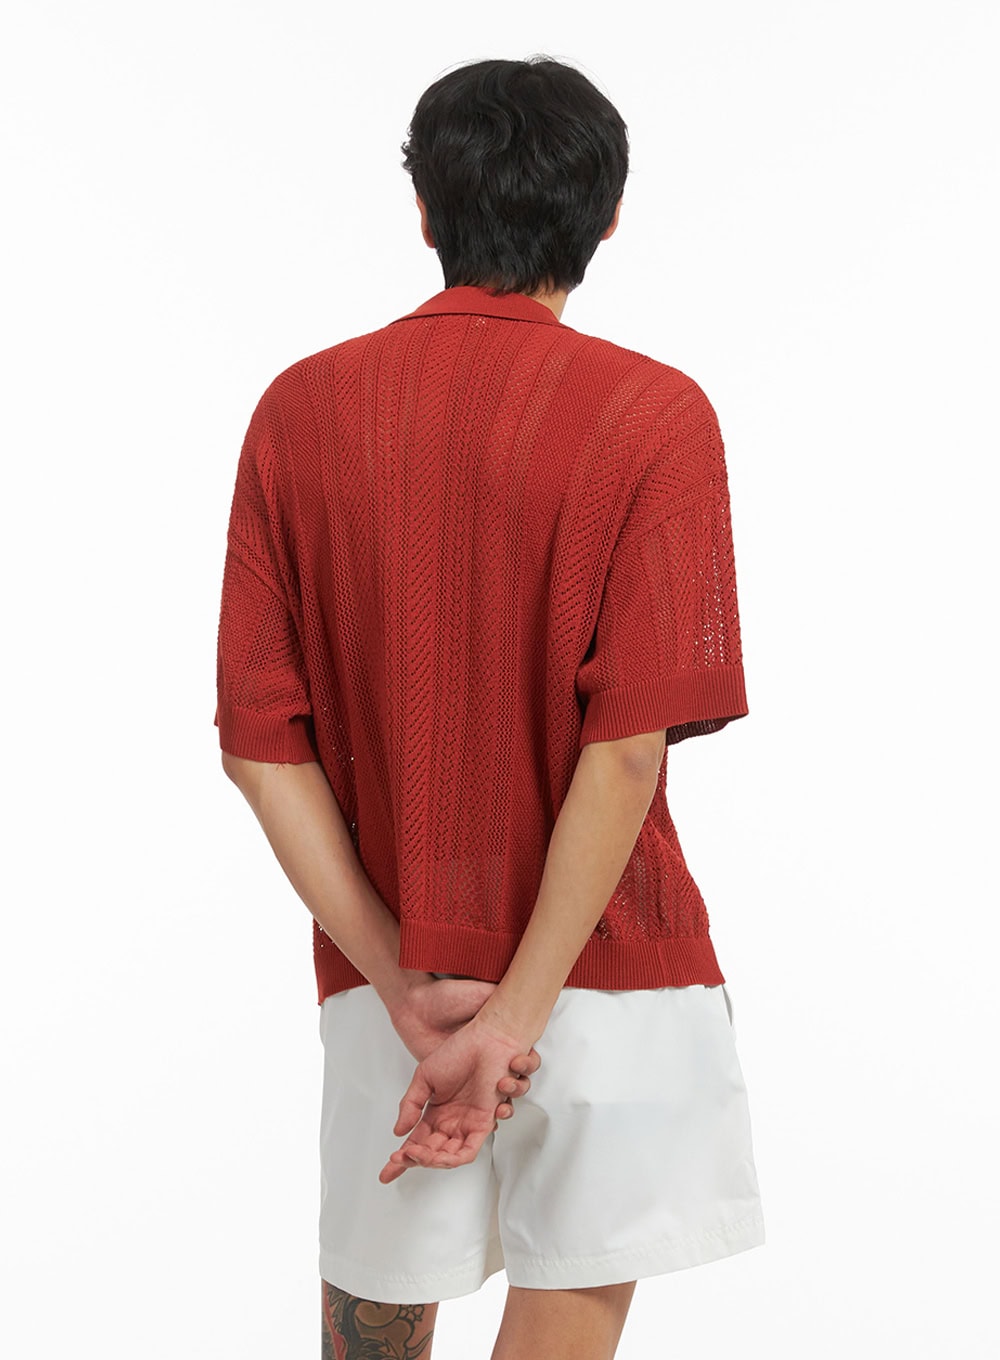 mens-short-sleeve-summer-knit-button-up-top-iy416